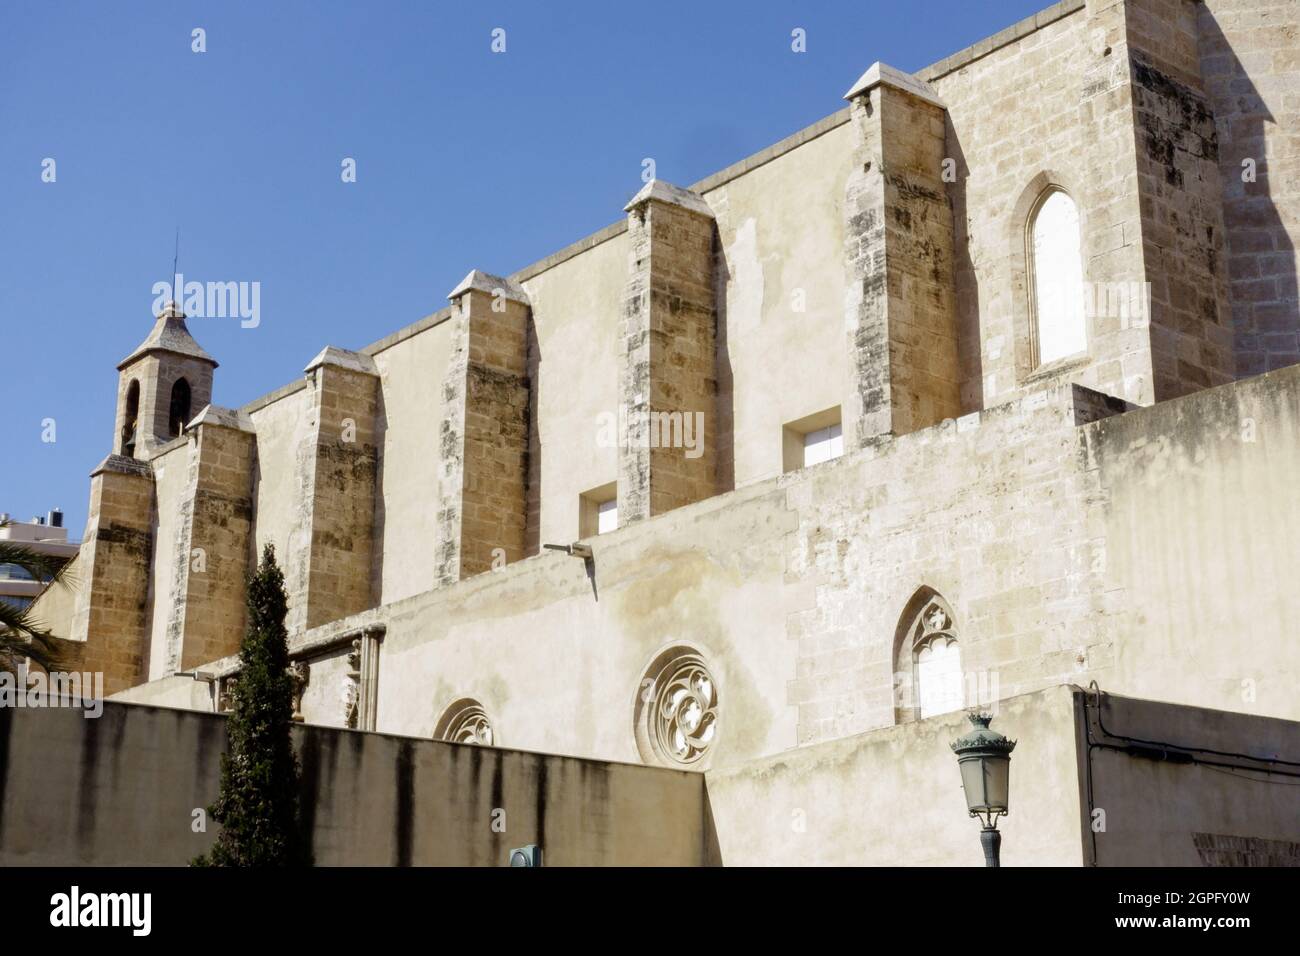 Real Monasterio de la Trinidad, Royal Monastery of the Trinity, Valencia, Spain Stock Photo